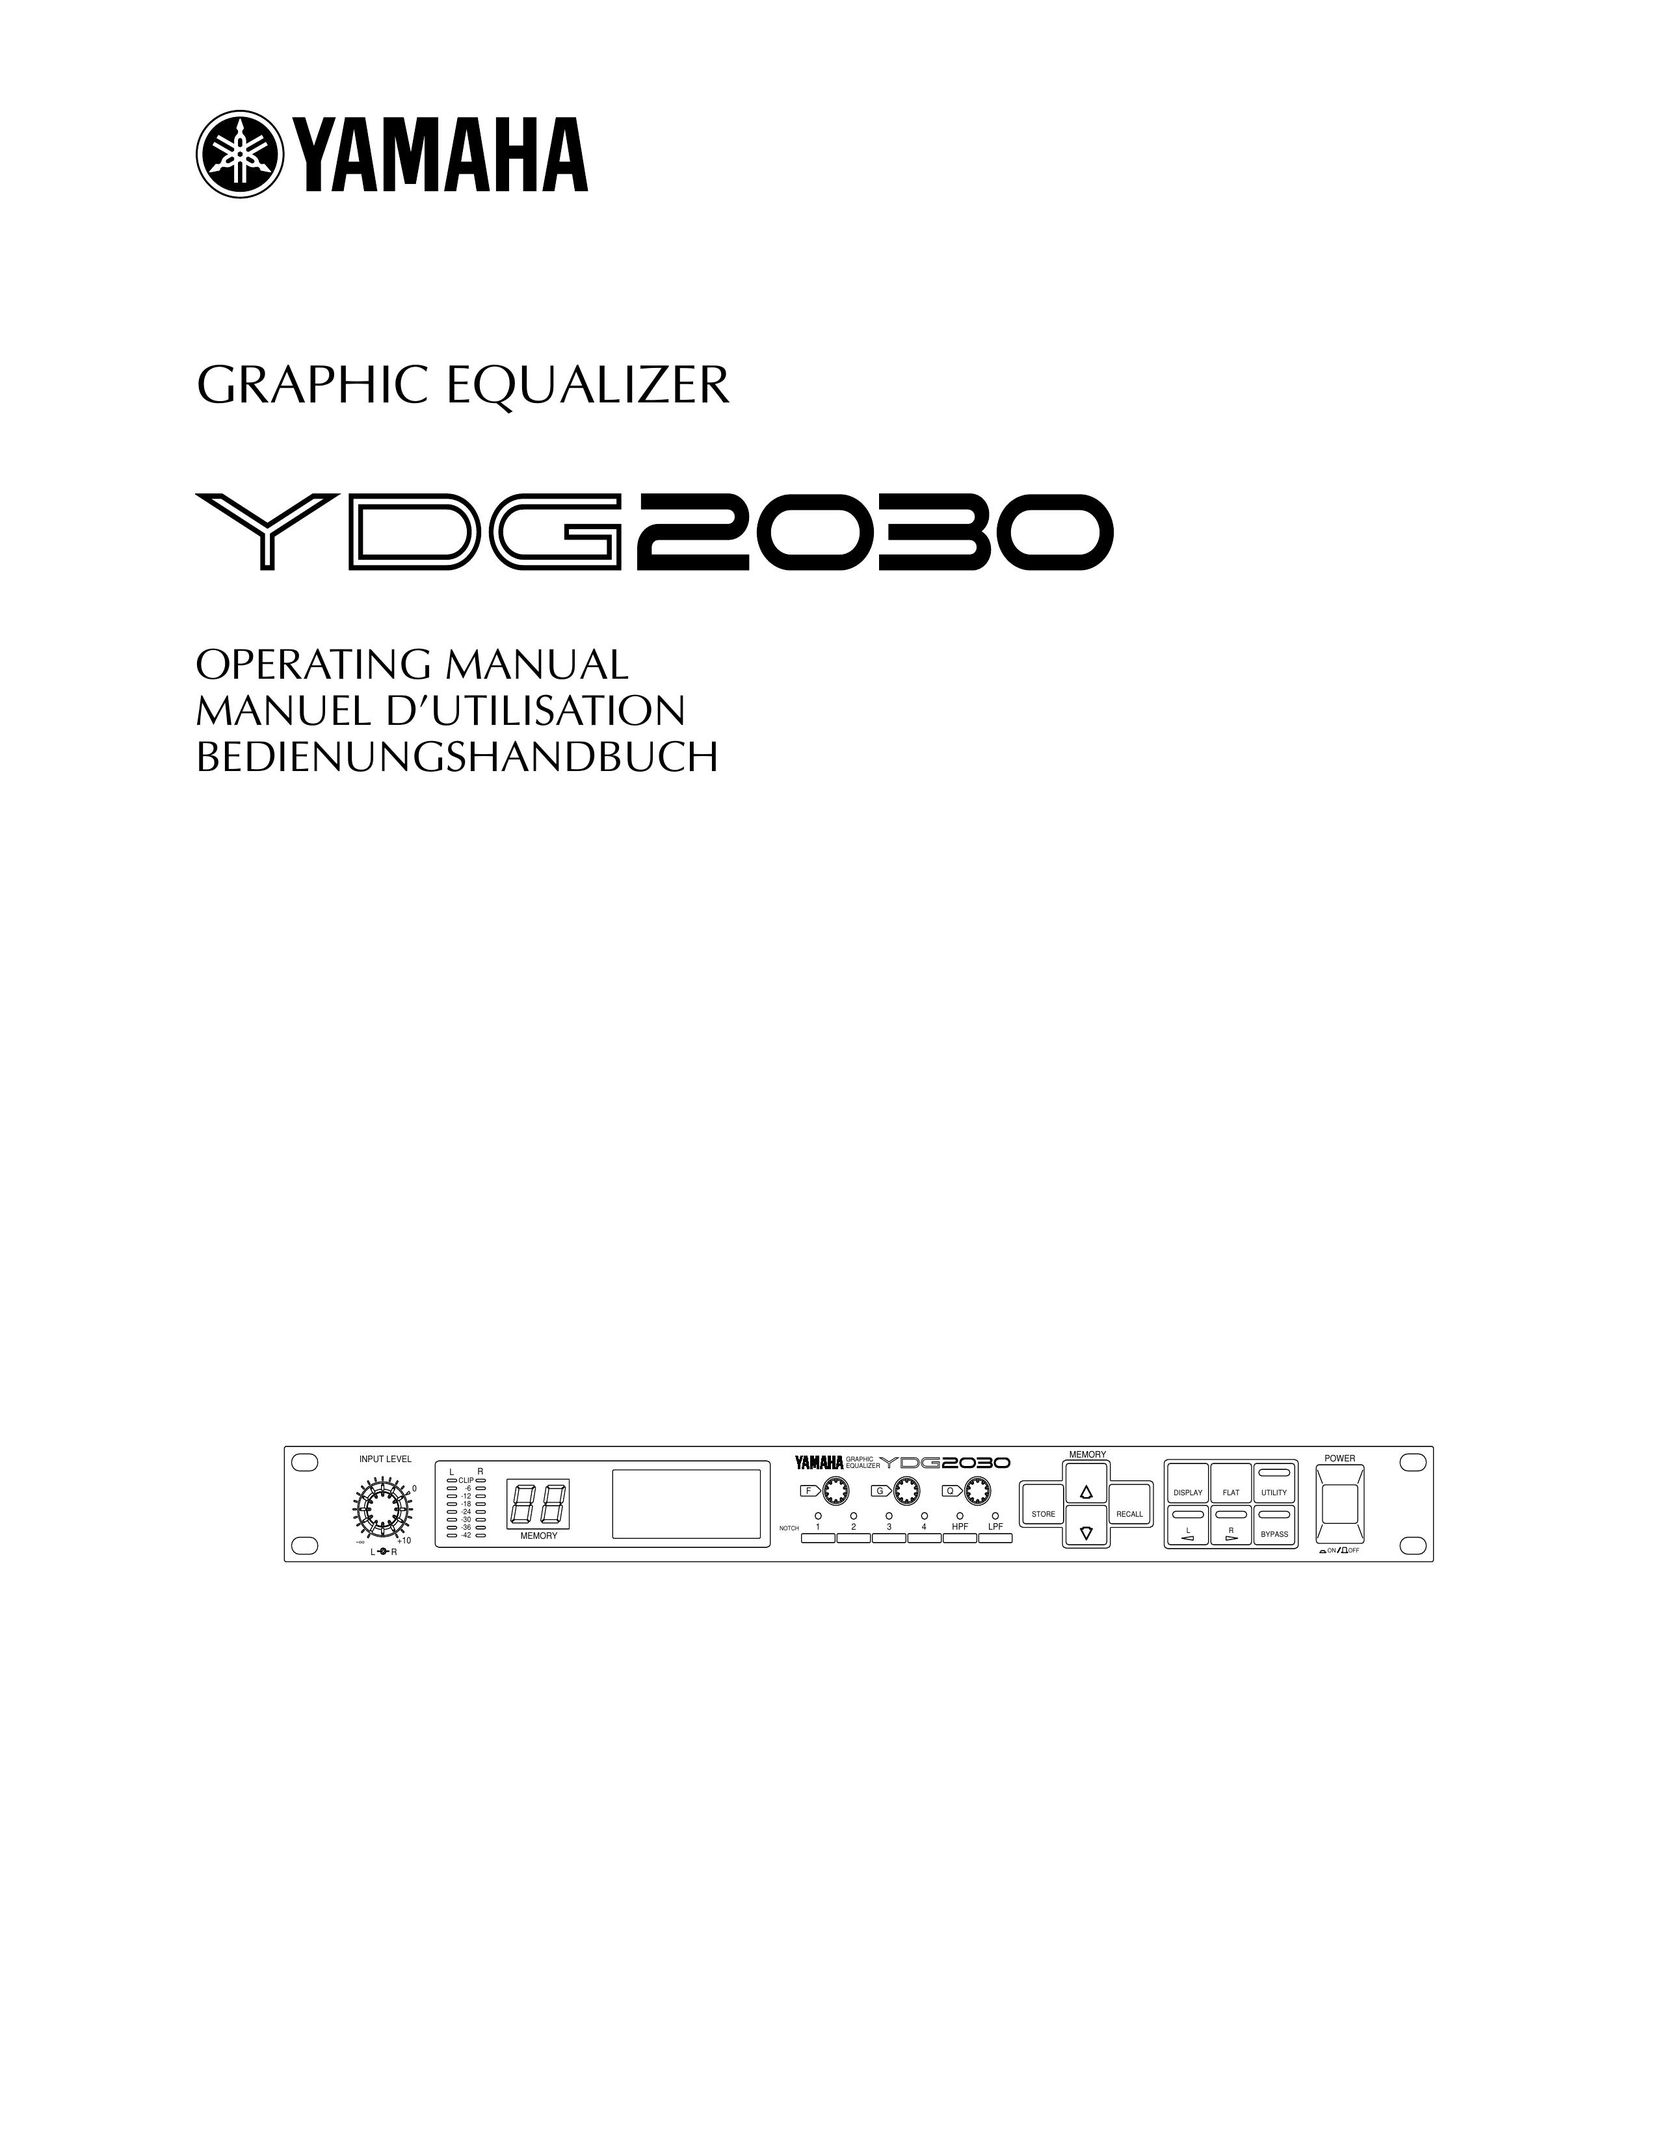 Yamaha YDG2030 Stereo Equalizer User Manual